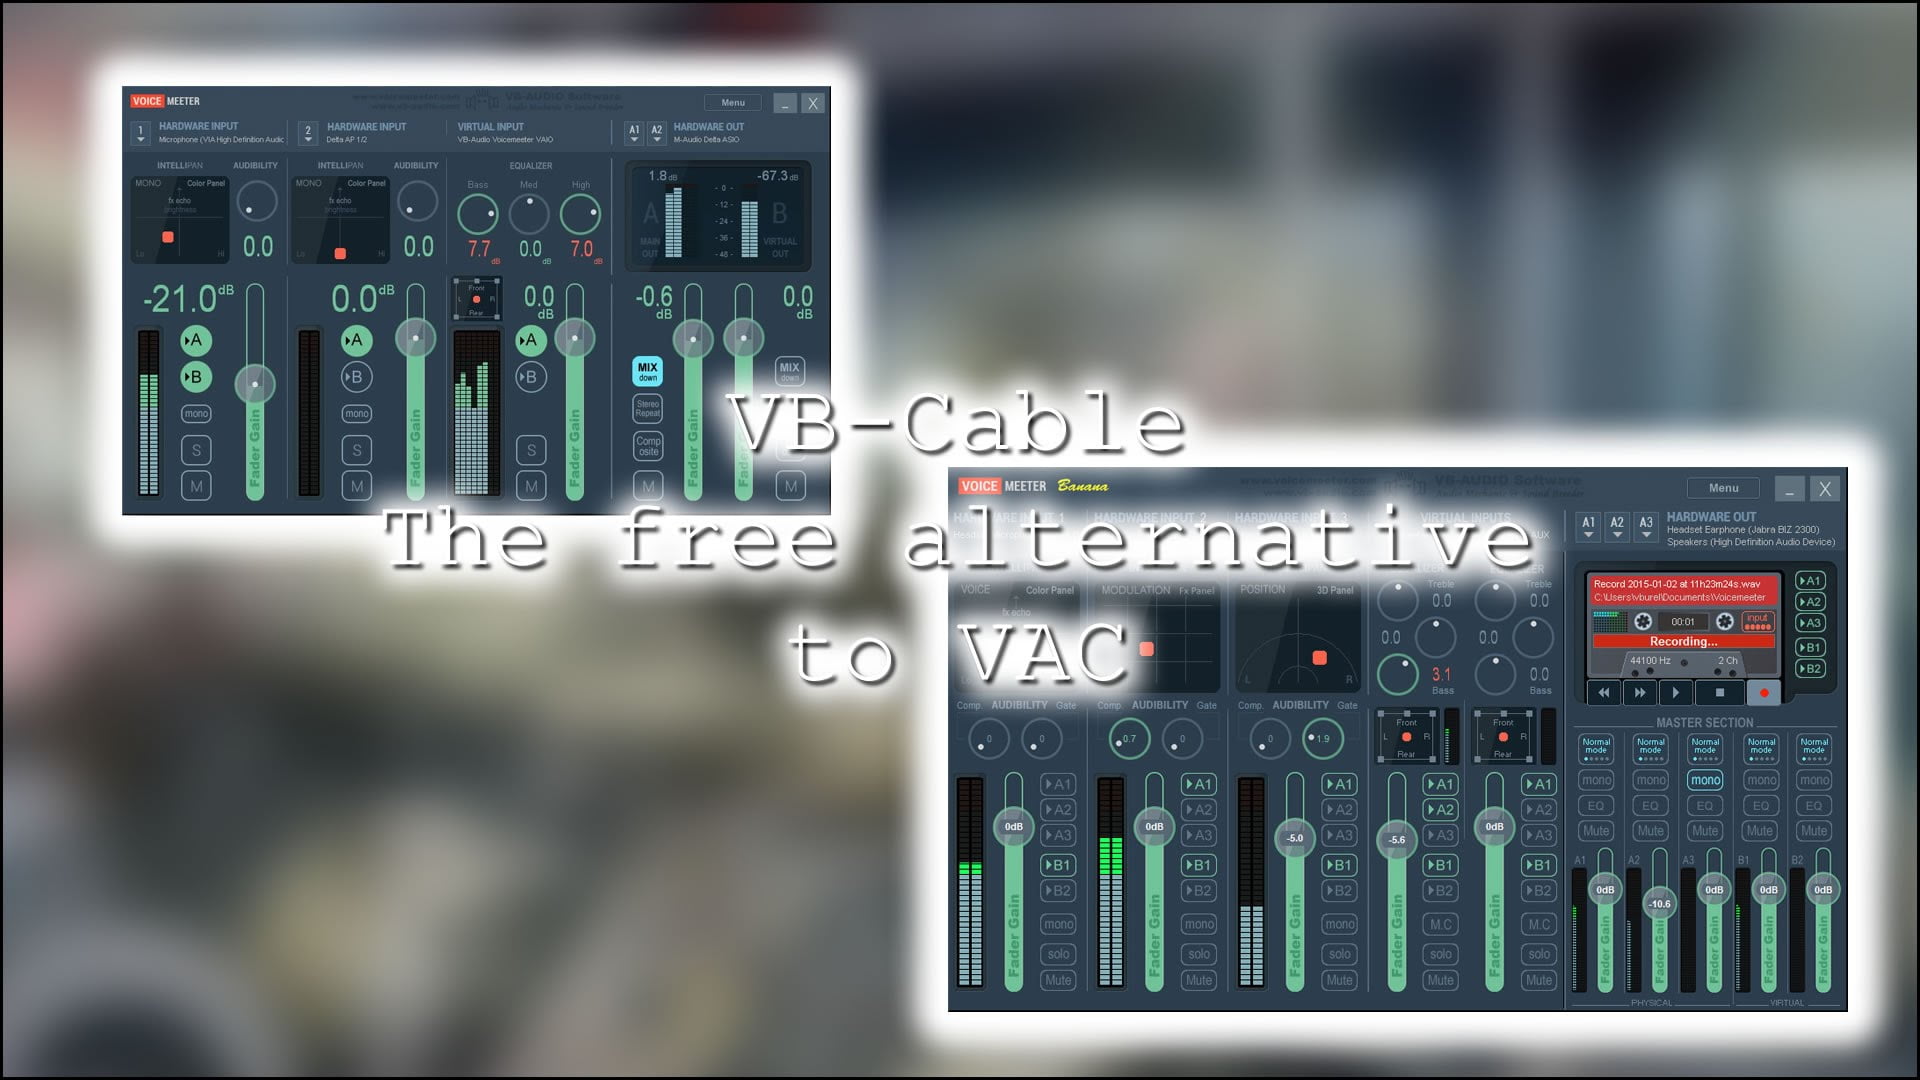 virtual audio cable tutorial